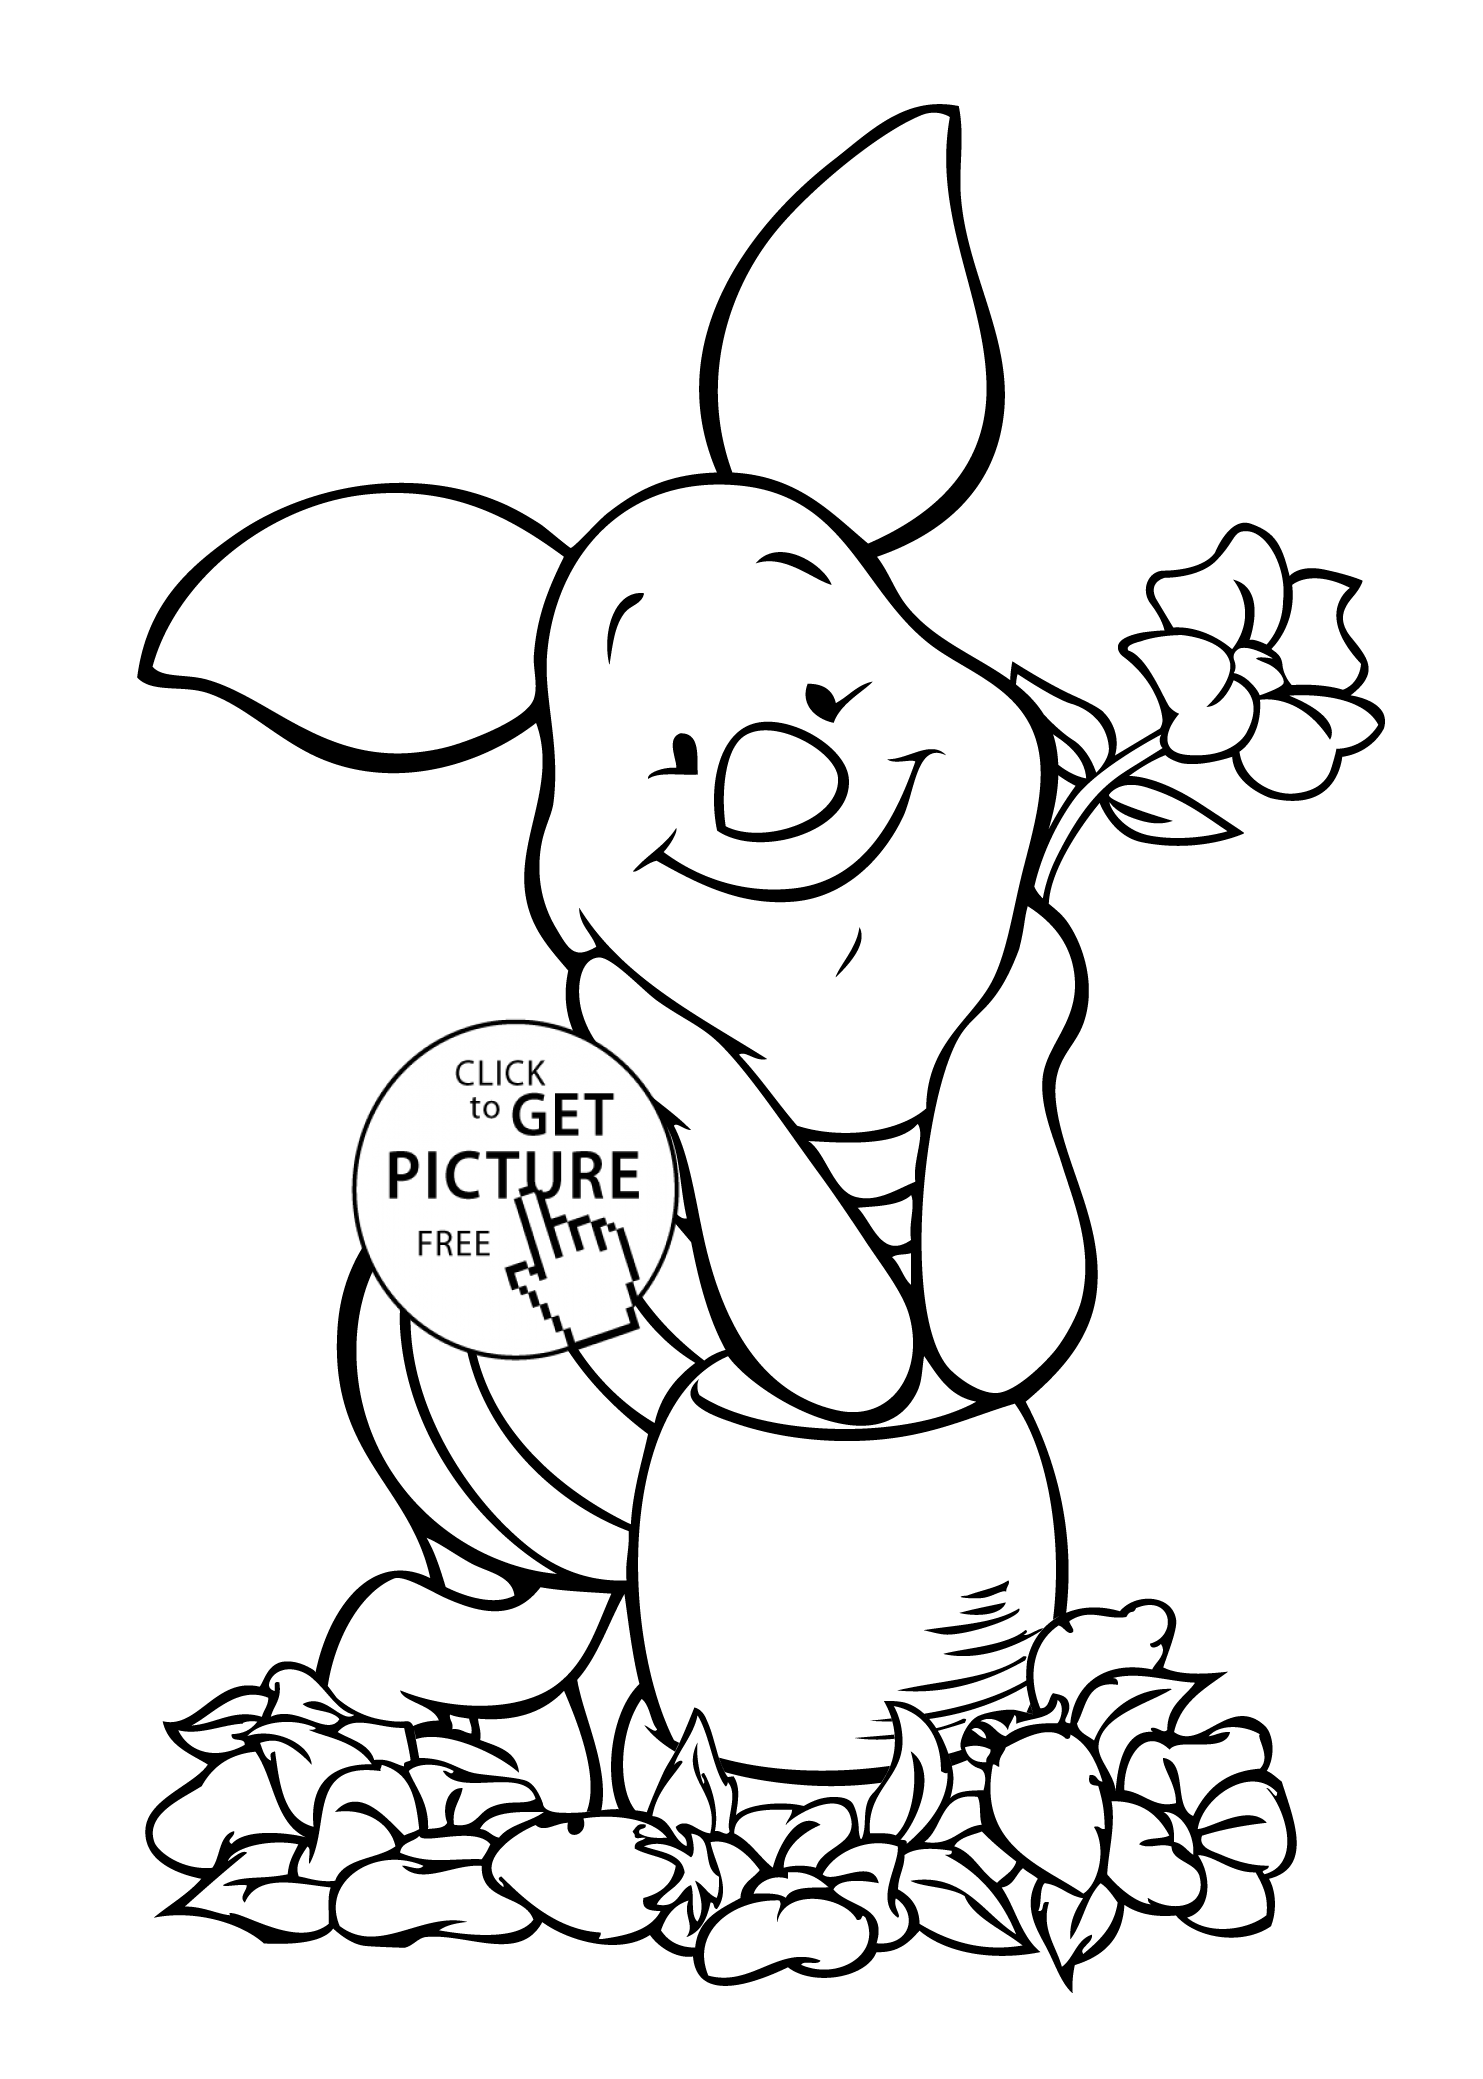 Winnie Pooh piglet coloring page for kids free printable